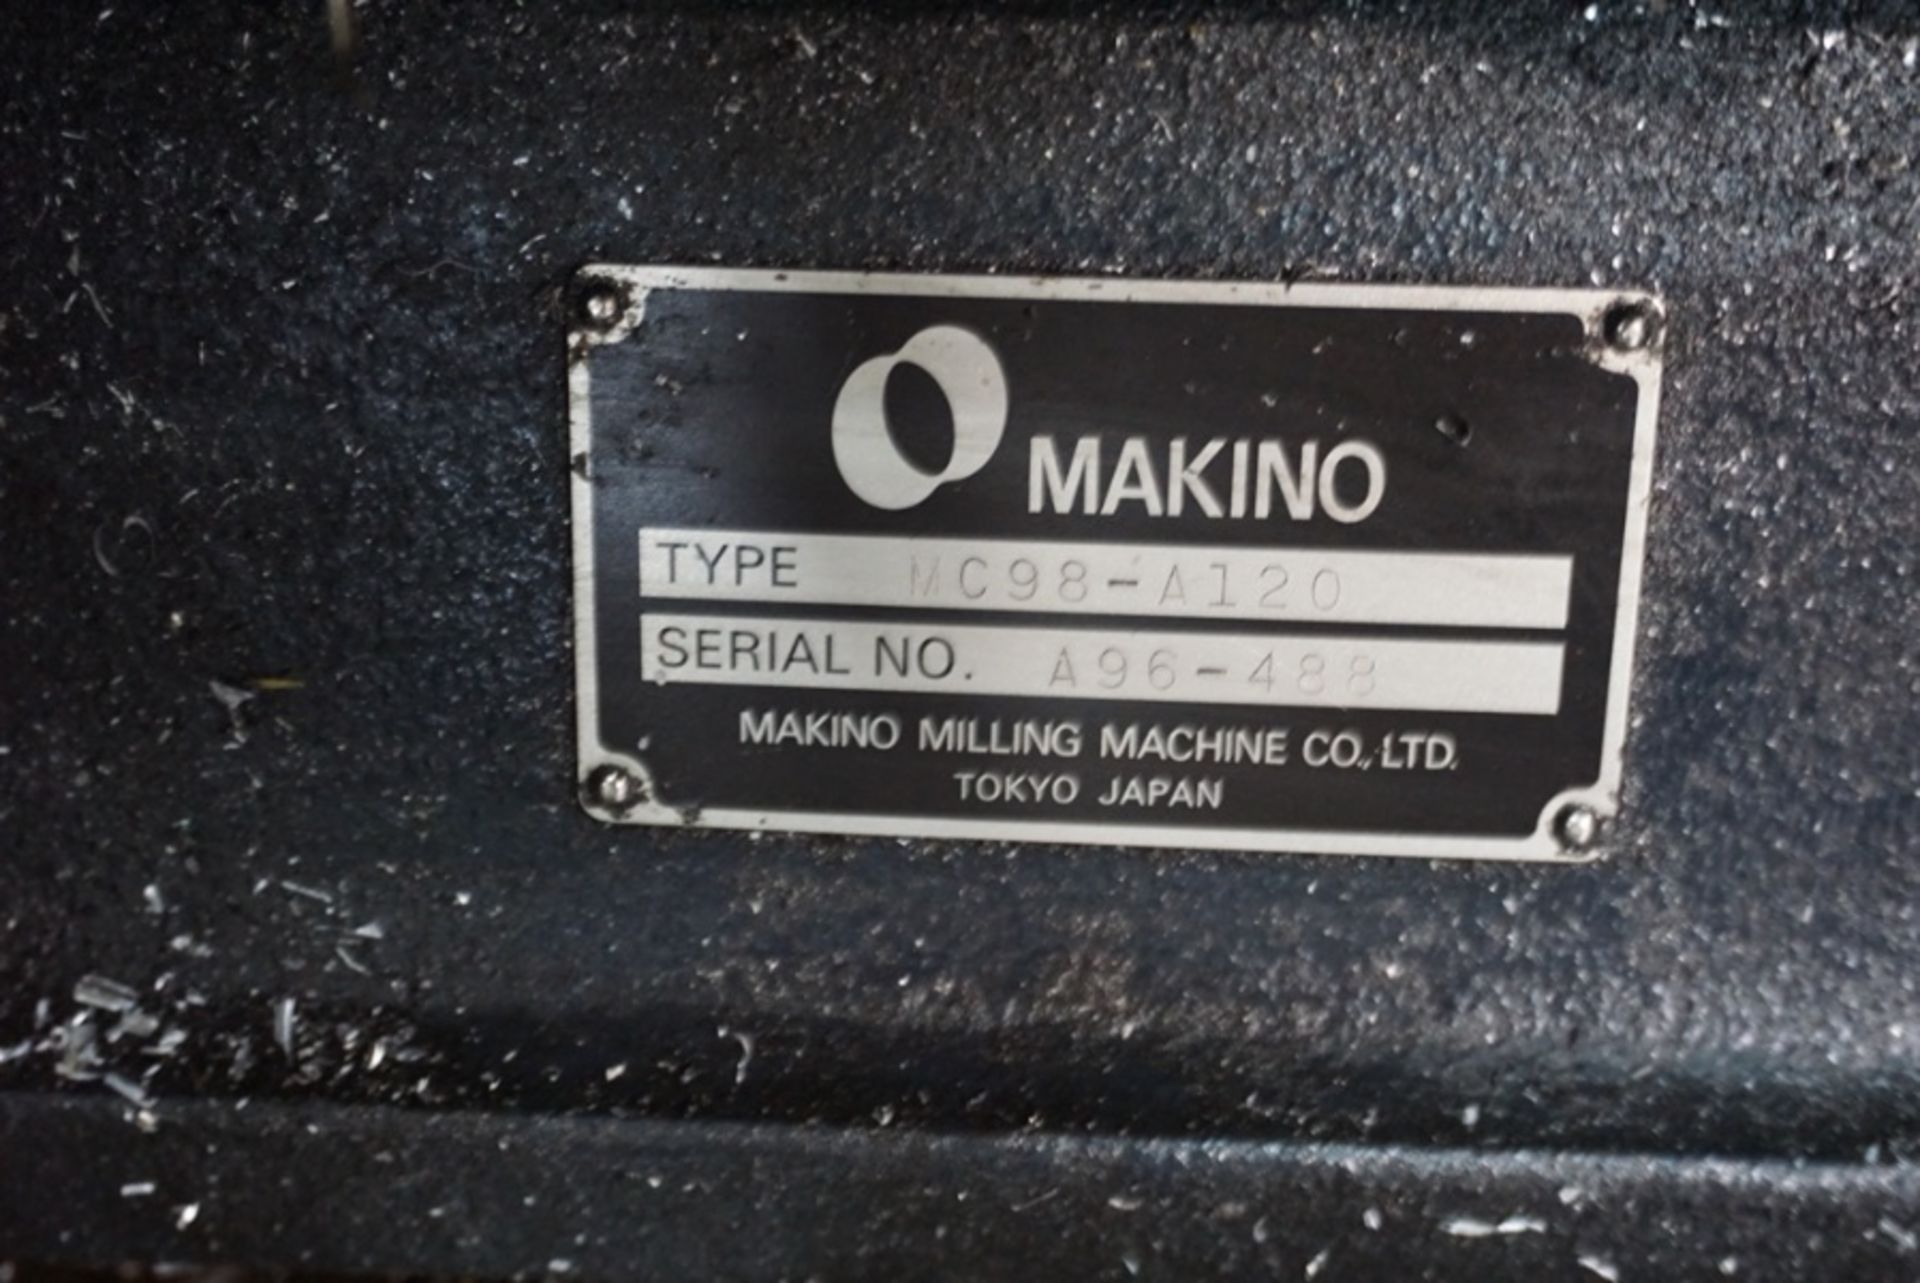 Makino MC98-A120 4-Axis Horizontal Machining Center, Fanuc 16 Pro 3 Control, 36”x 32” x 29.5” - Image 6 of 6